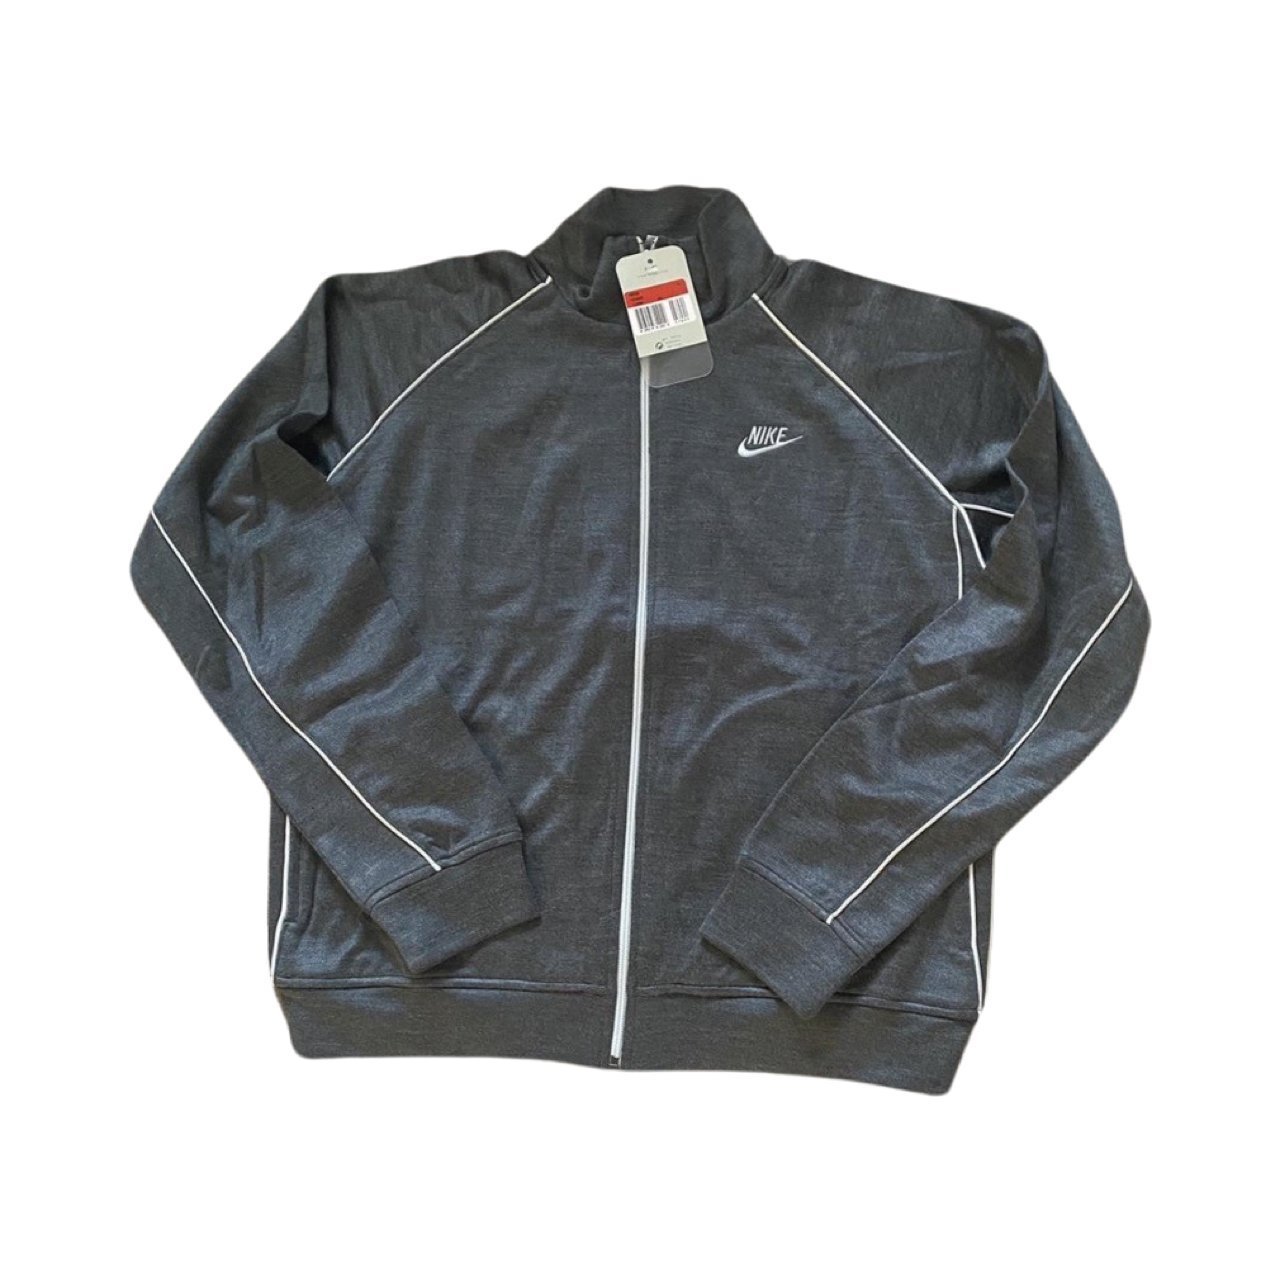 Nike Swoosh Retro Grey Full Zip Lightweight Jacket for Men - Soul and Sense Streetwear